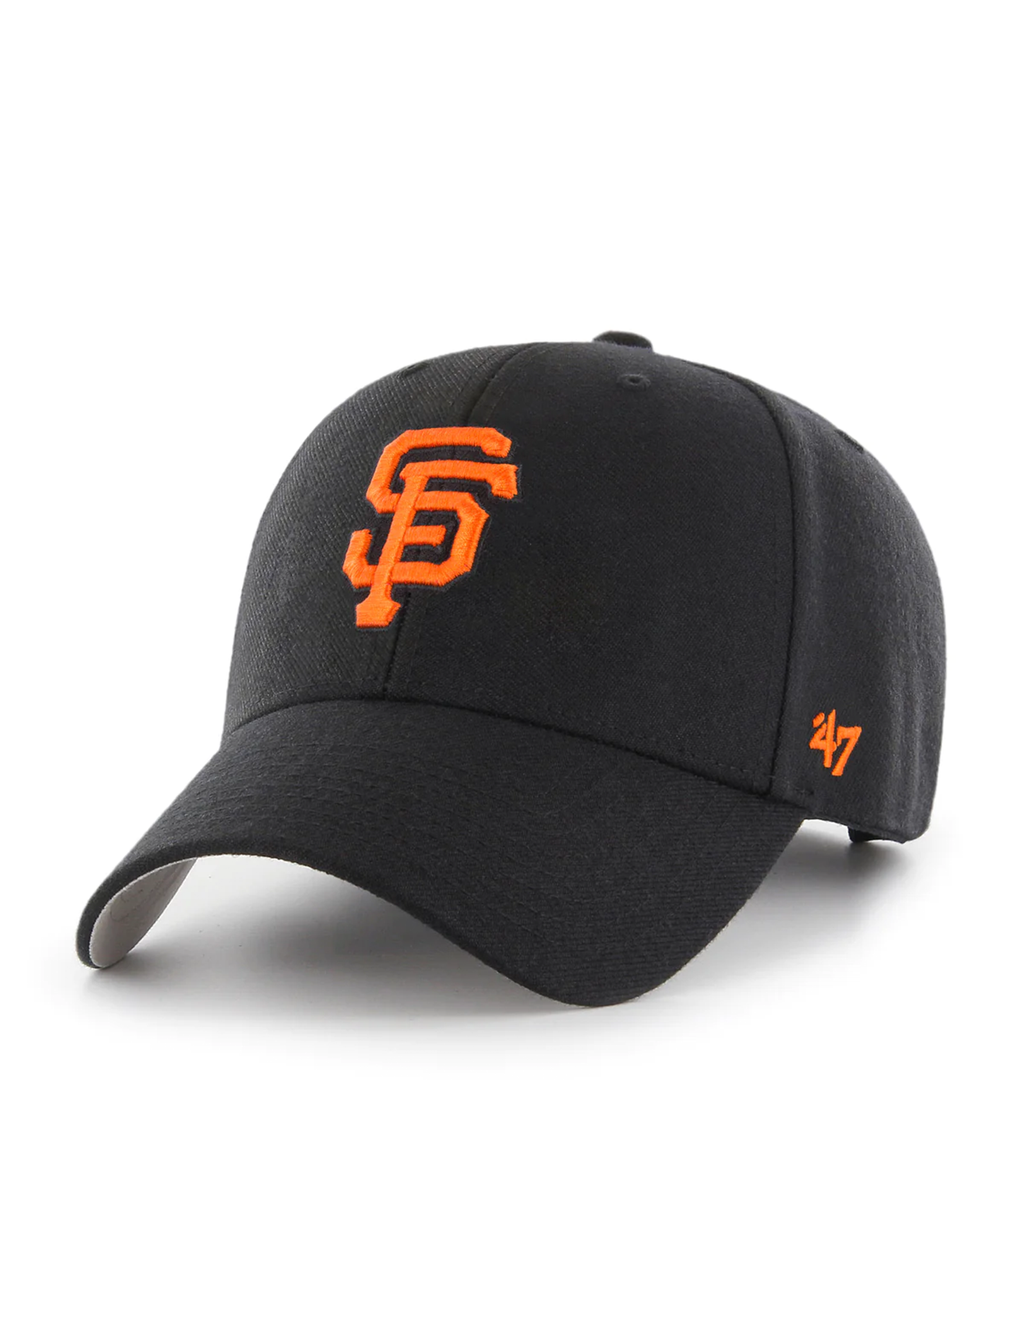 SF Giants MVP Ball Cap, Black/Orange